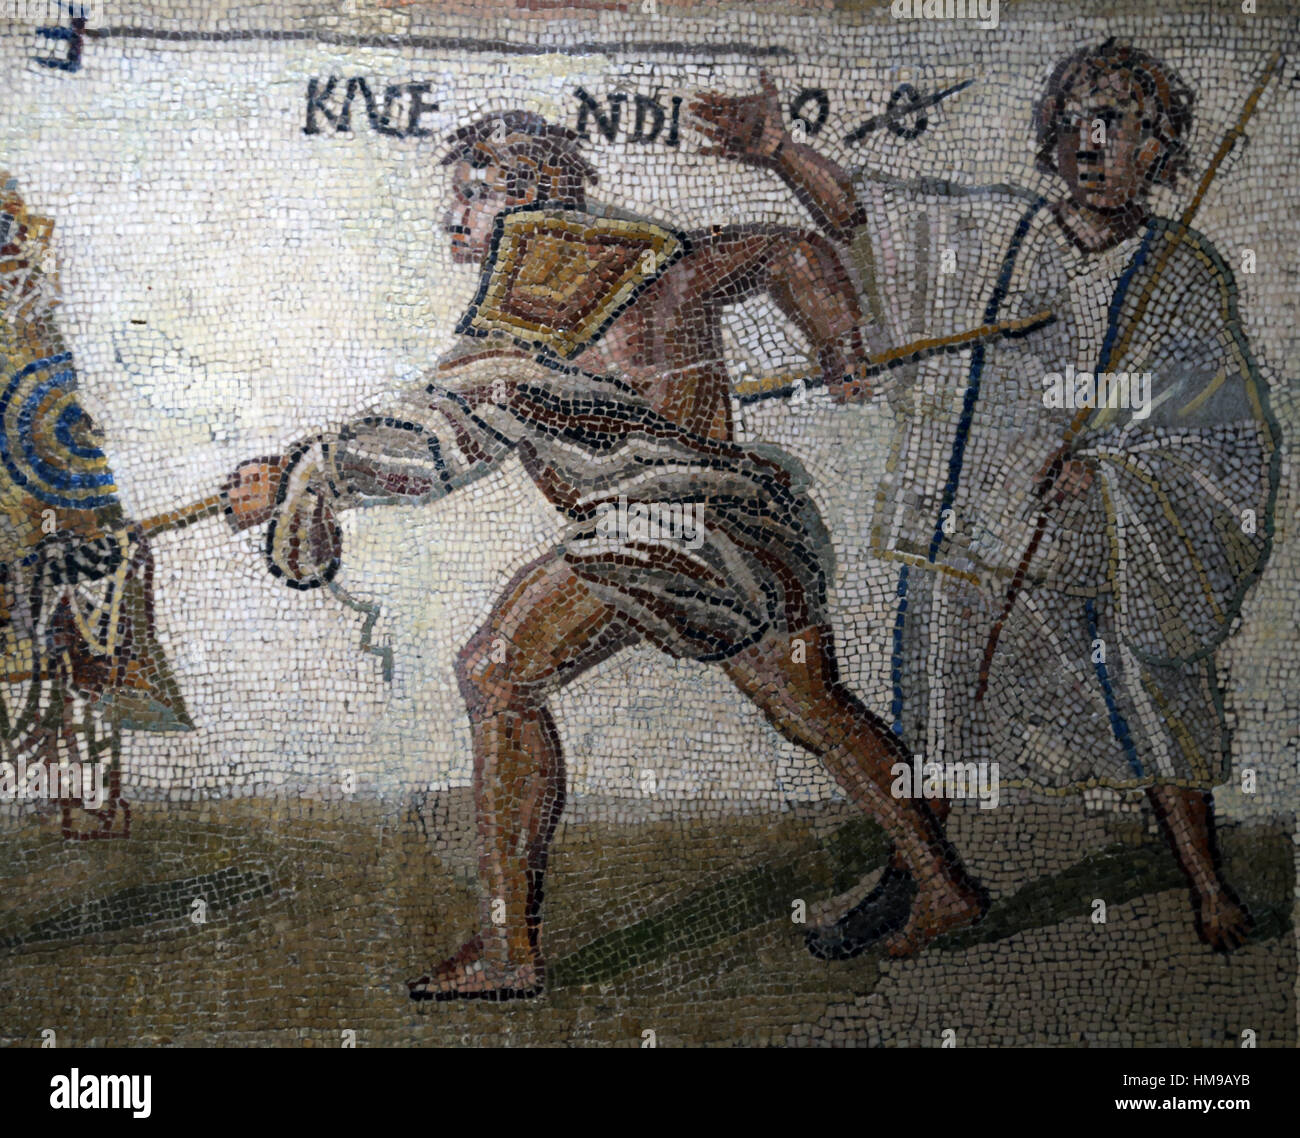 Secutor versus retiarius. Mosaic. Limestone. 3rd century. Rome. Detail. The retiarius Kalendio in mortal combat. Abbreviation o (obiit, death). Stock Photo